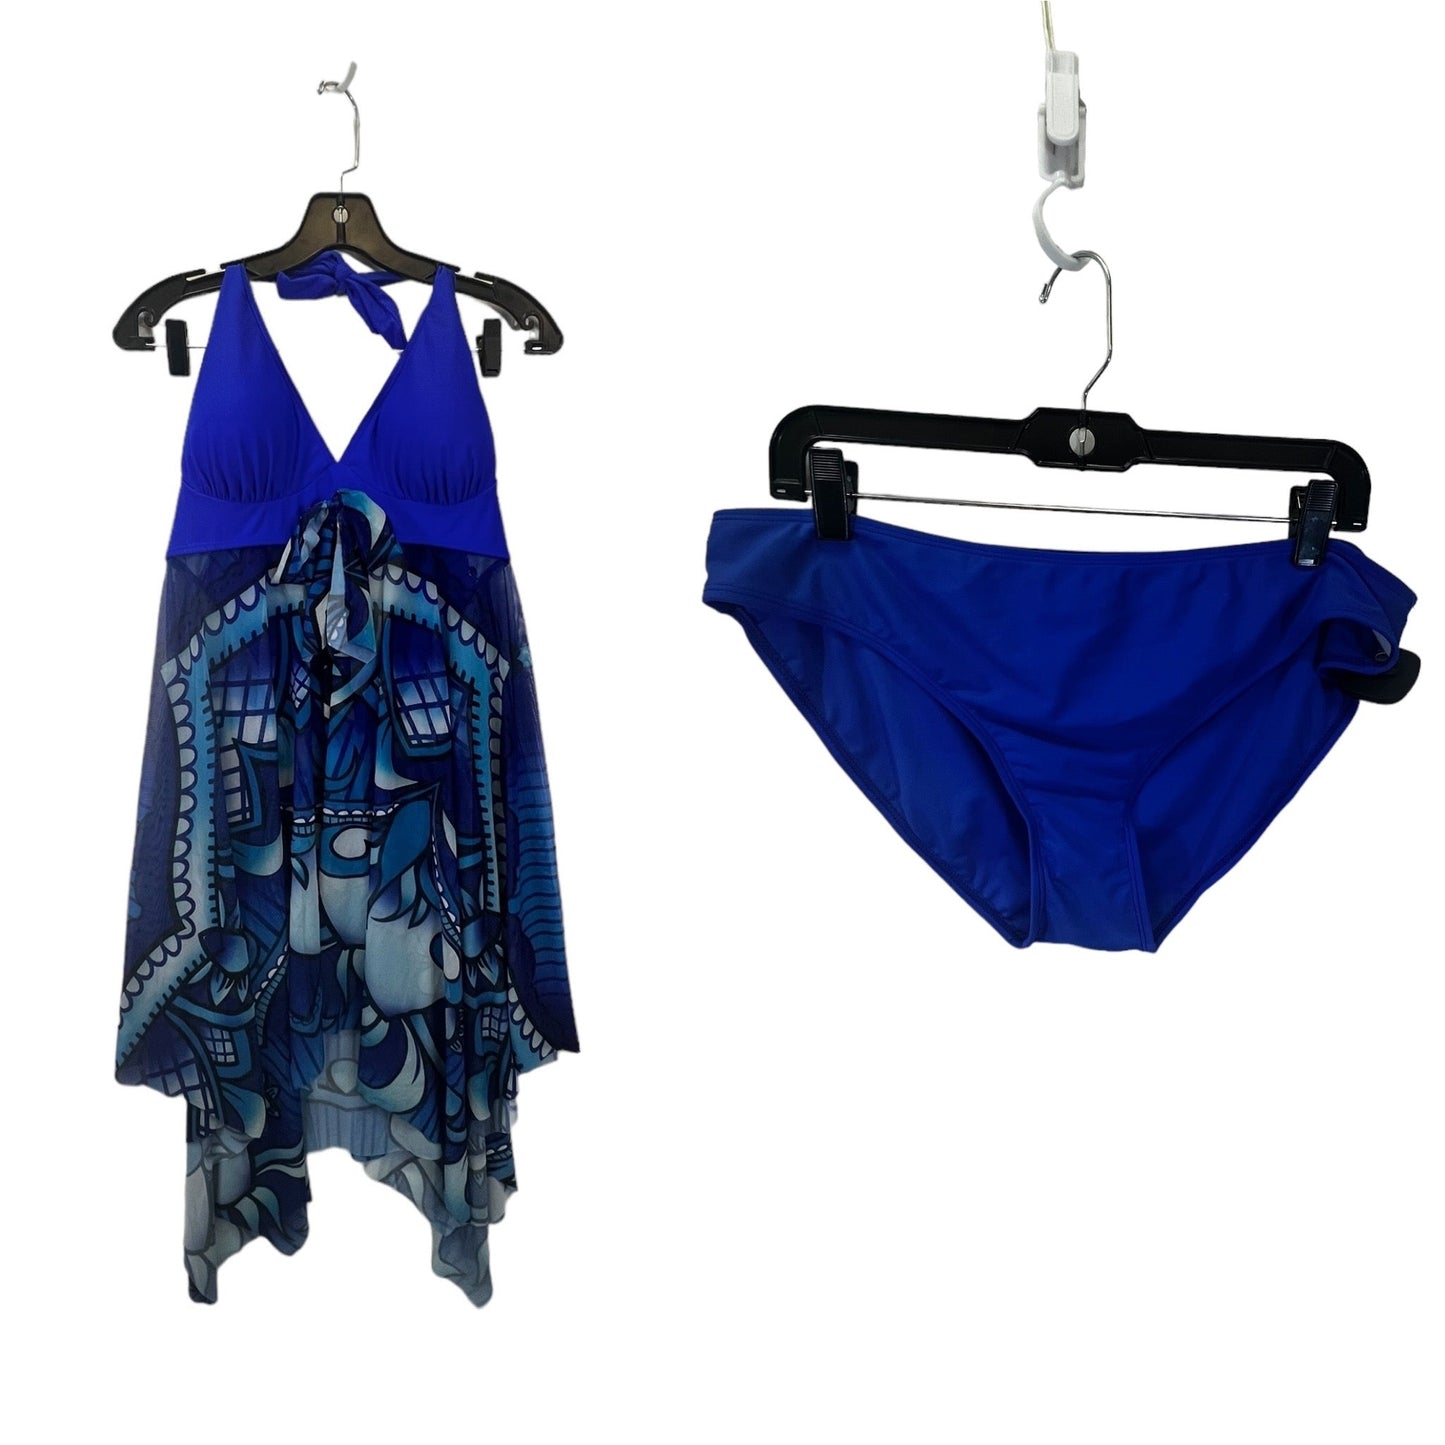 Blue & White Swimsuit Clothes Mentor, Size Xl